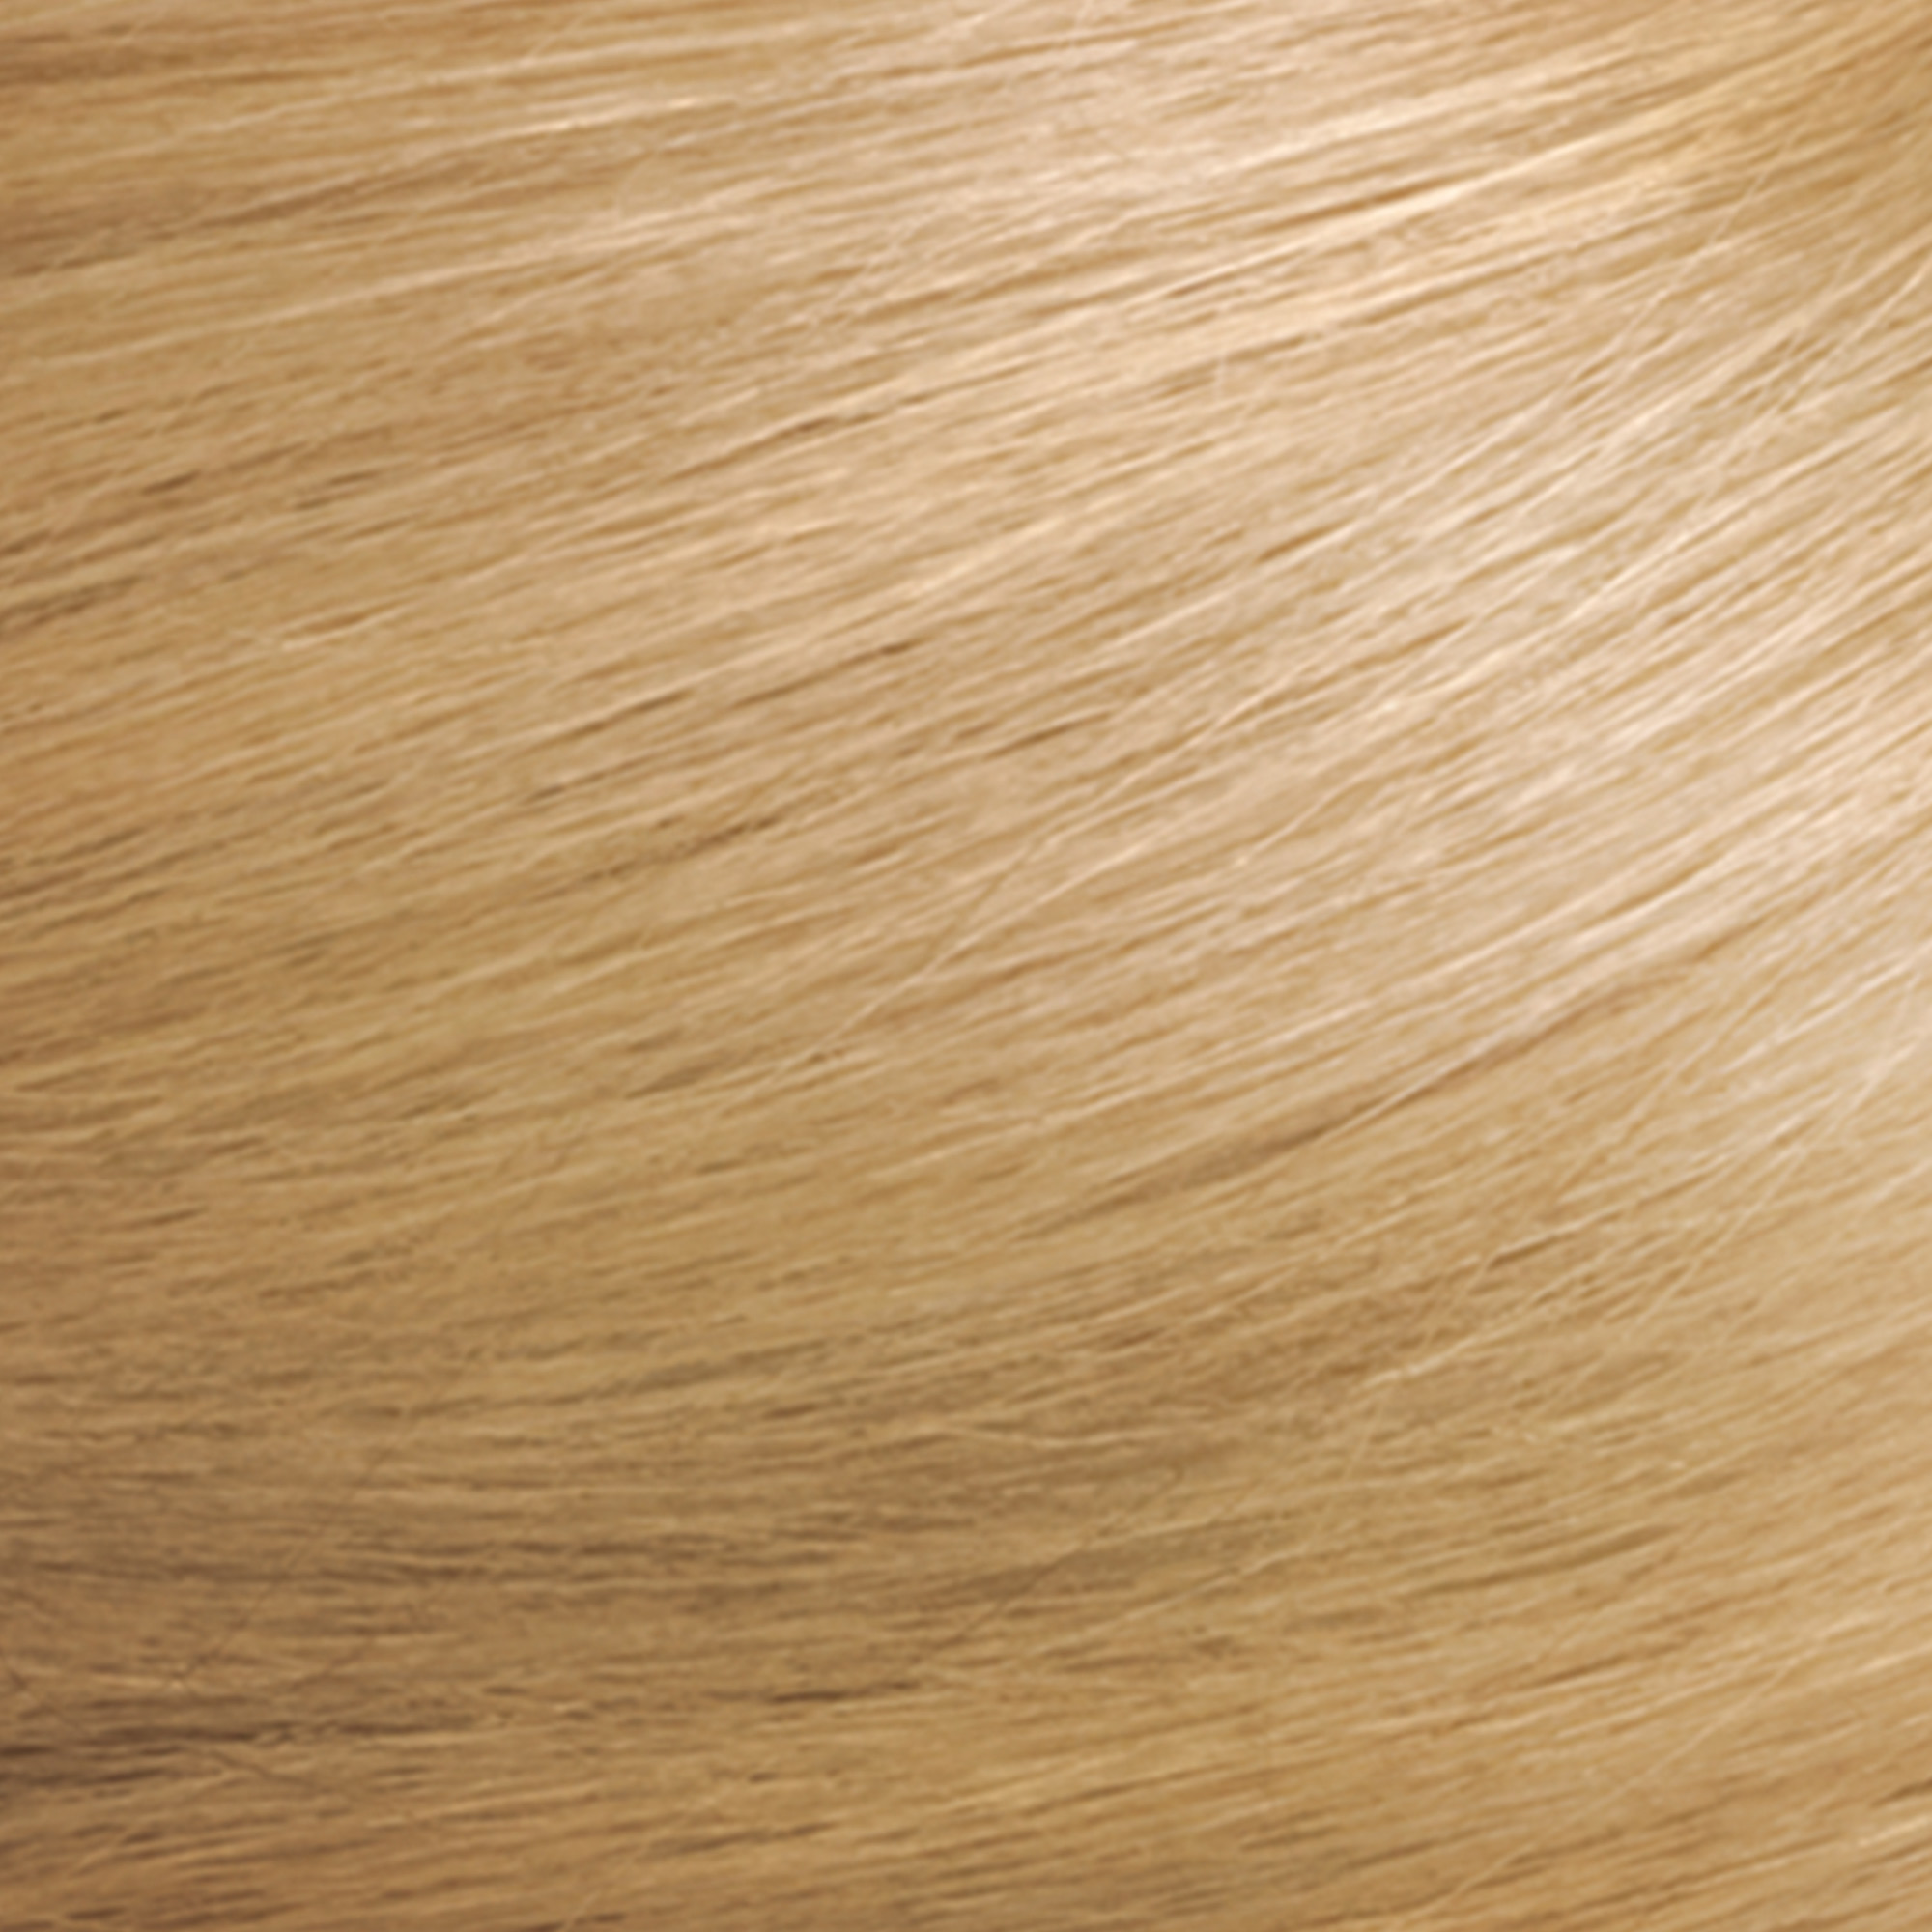 Revlon ColorSilk Beautiful Color Permanent Hair Color, 74 Medium Blonde, 1 Count - image 3 of 14